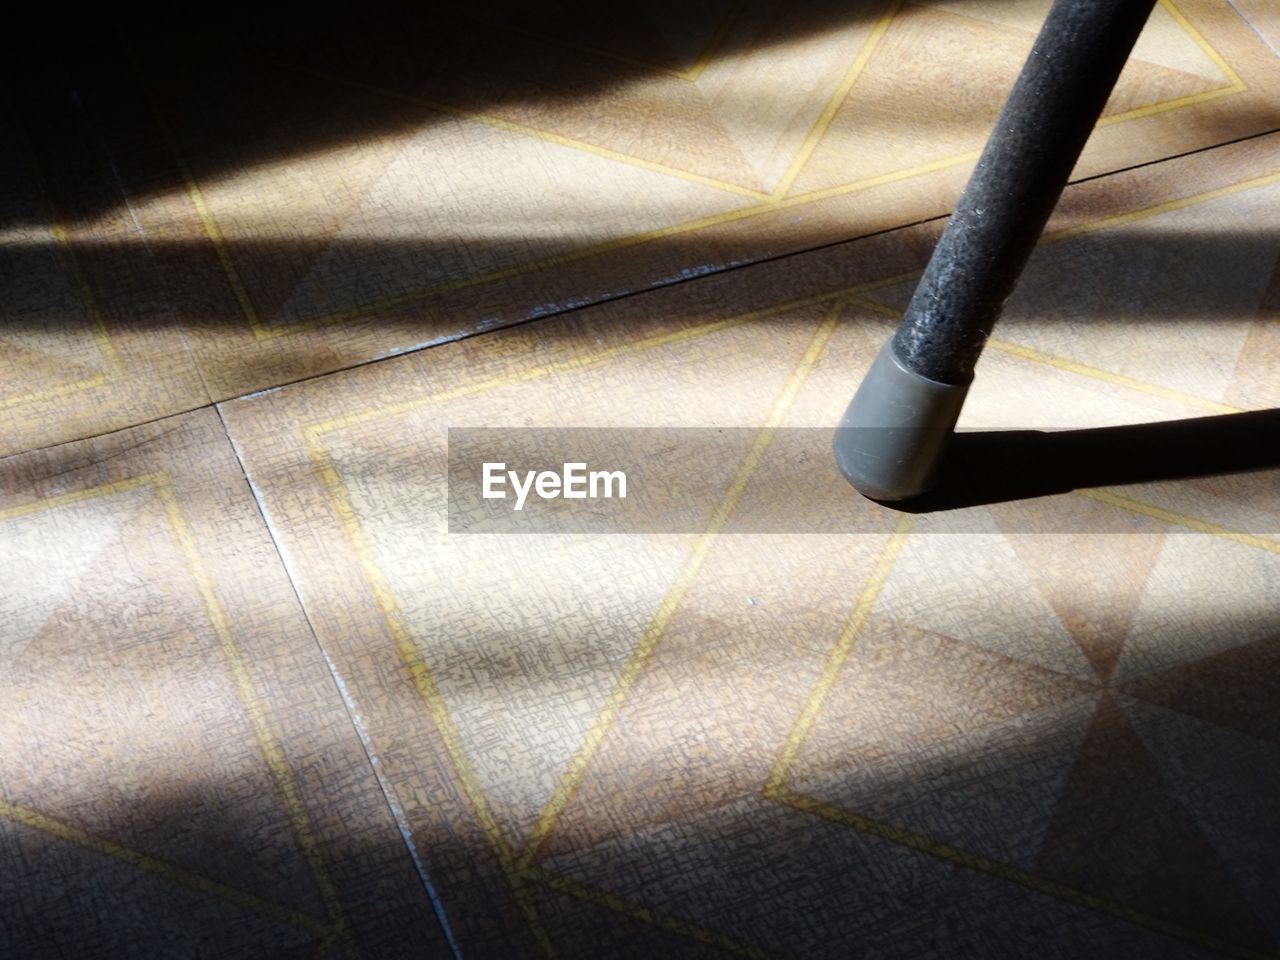 High angle view of metallic rod on tiled floor with shadow